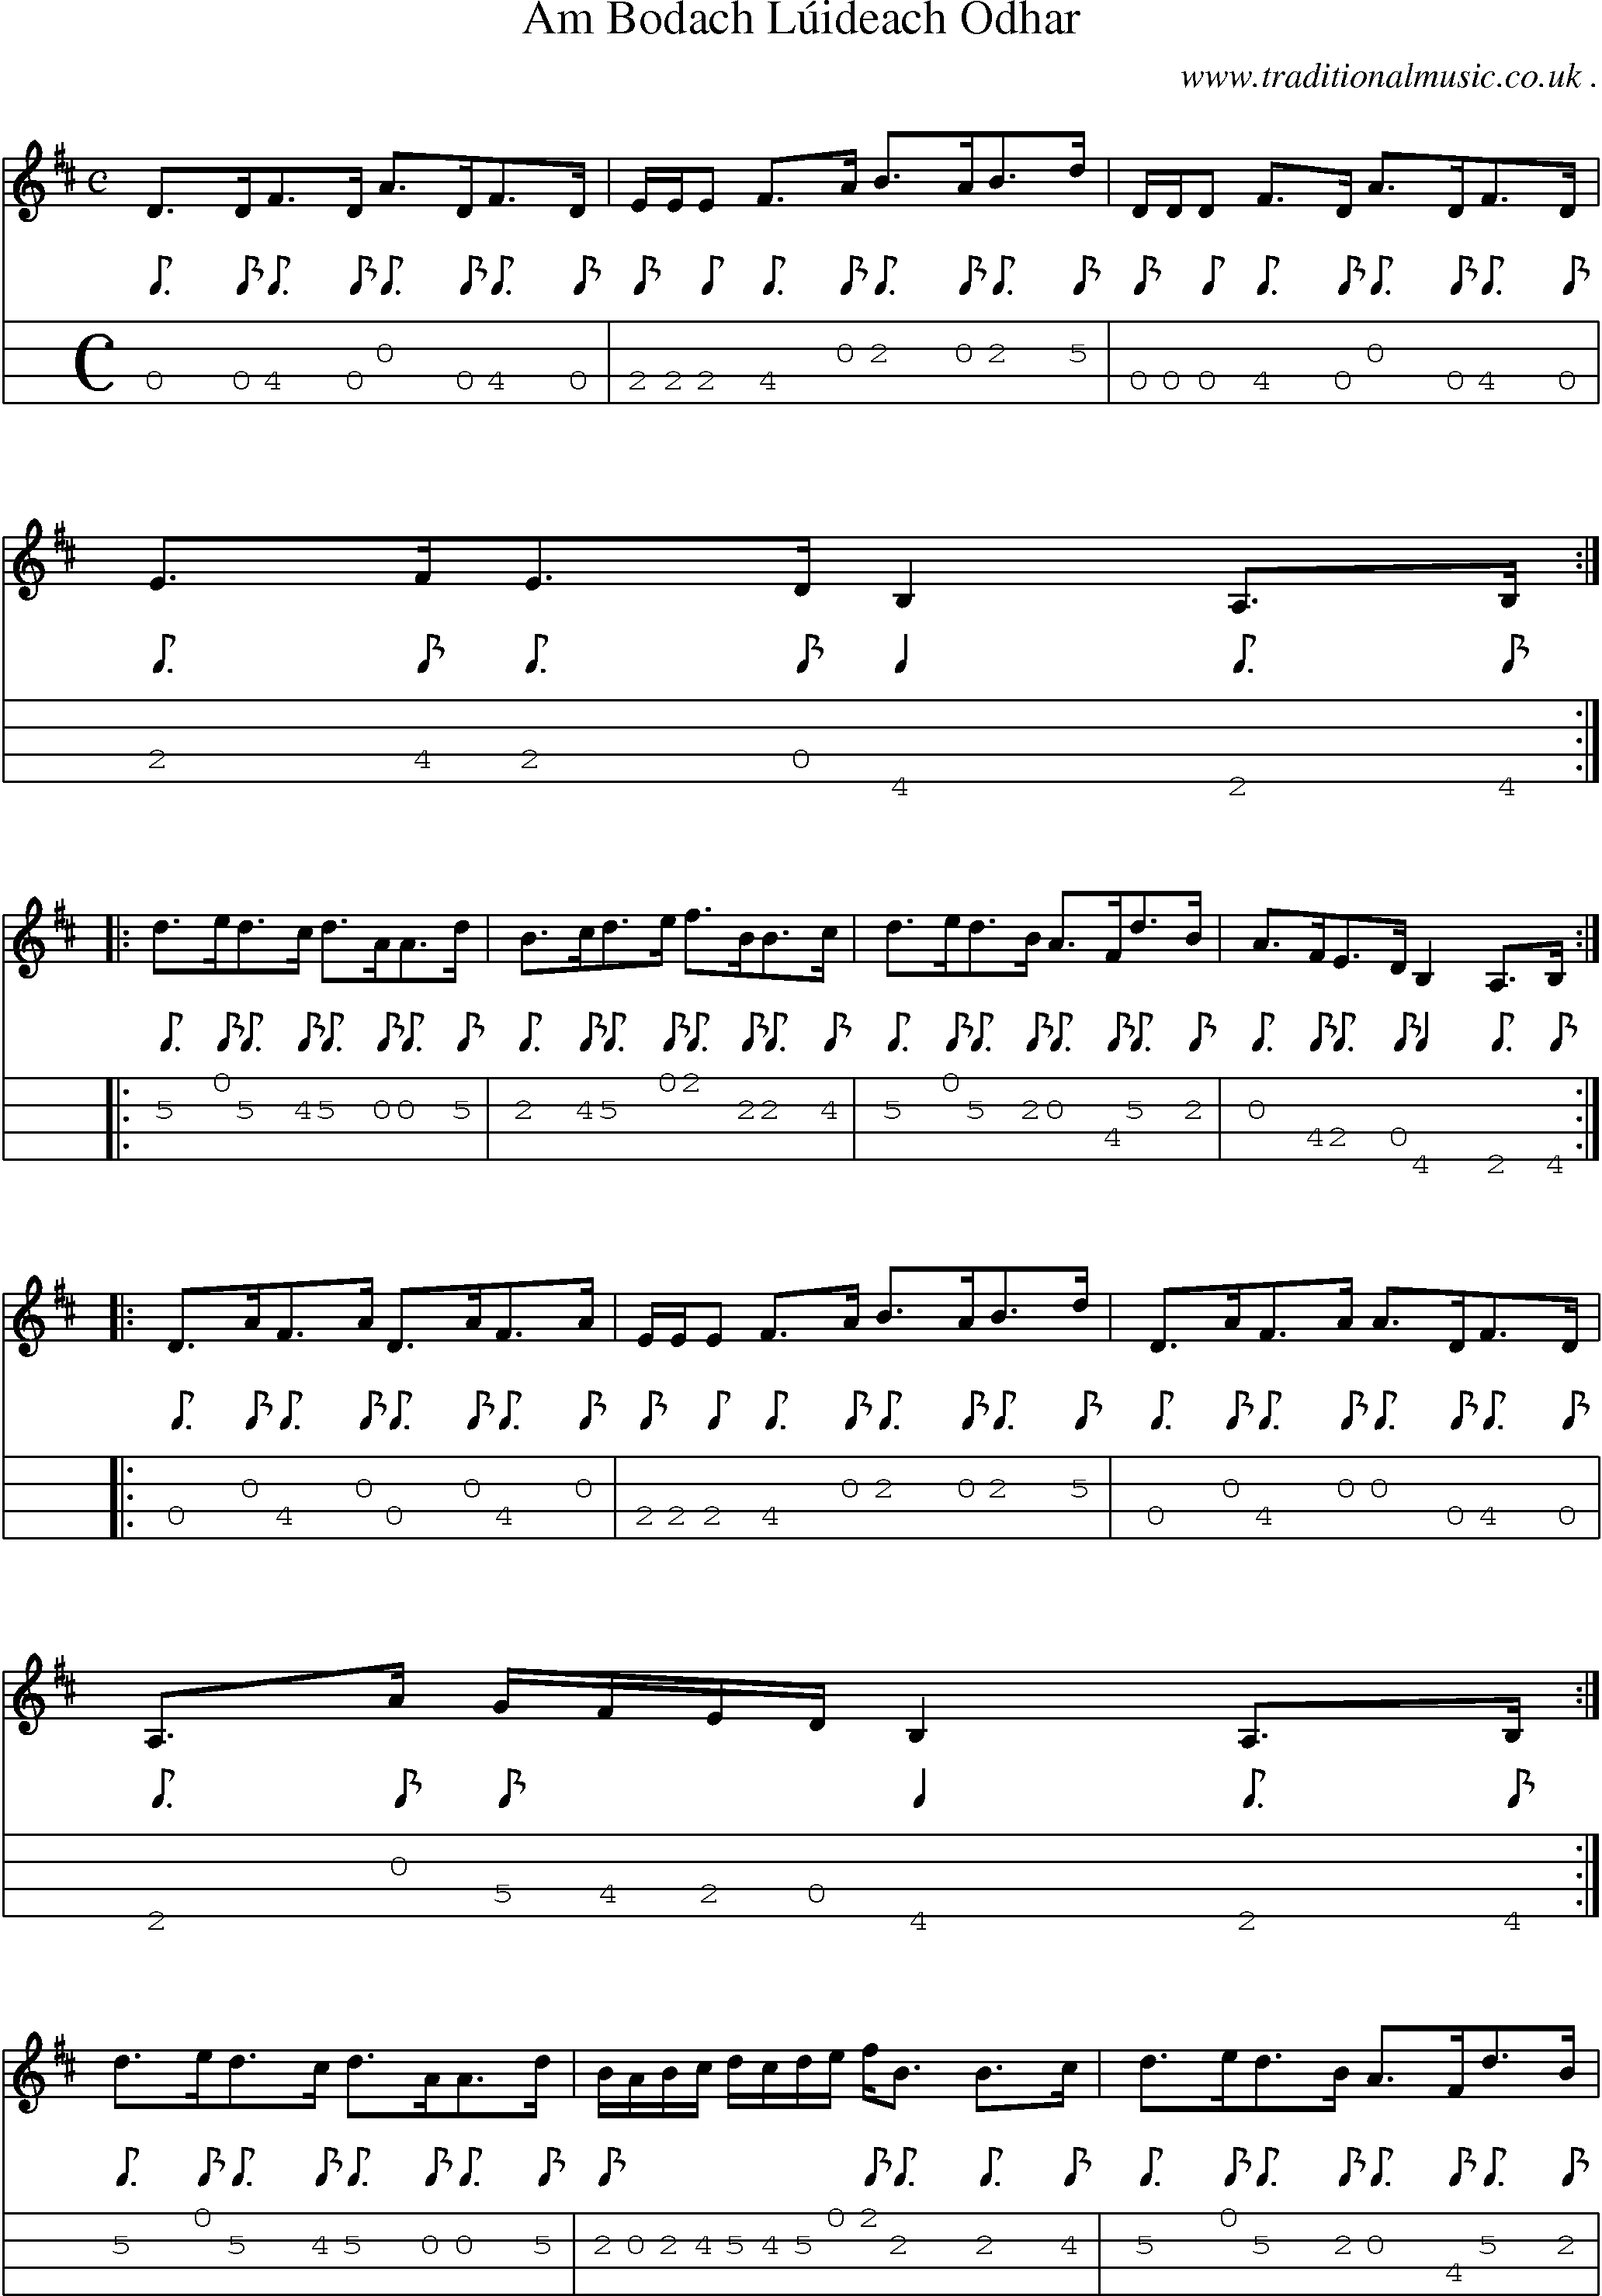 Sheet-music  score, Chords and Mandolin Tabs for Am Bodach Luideach Odhar